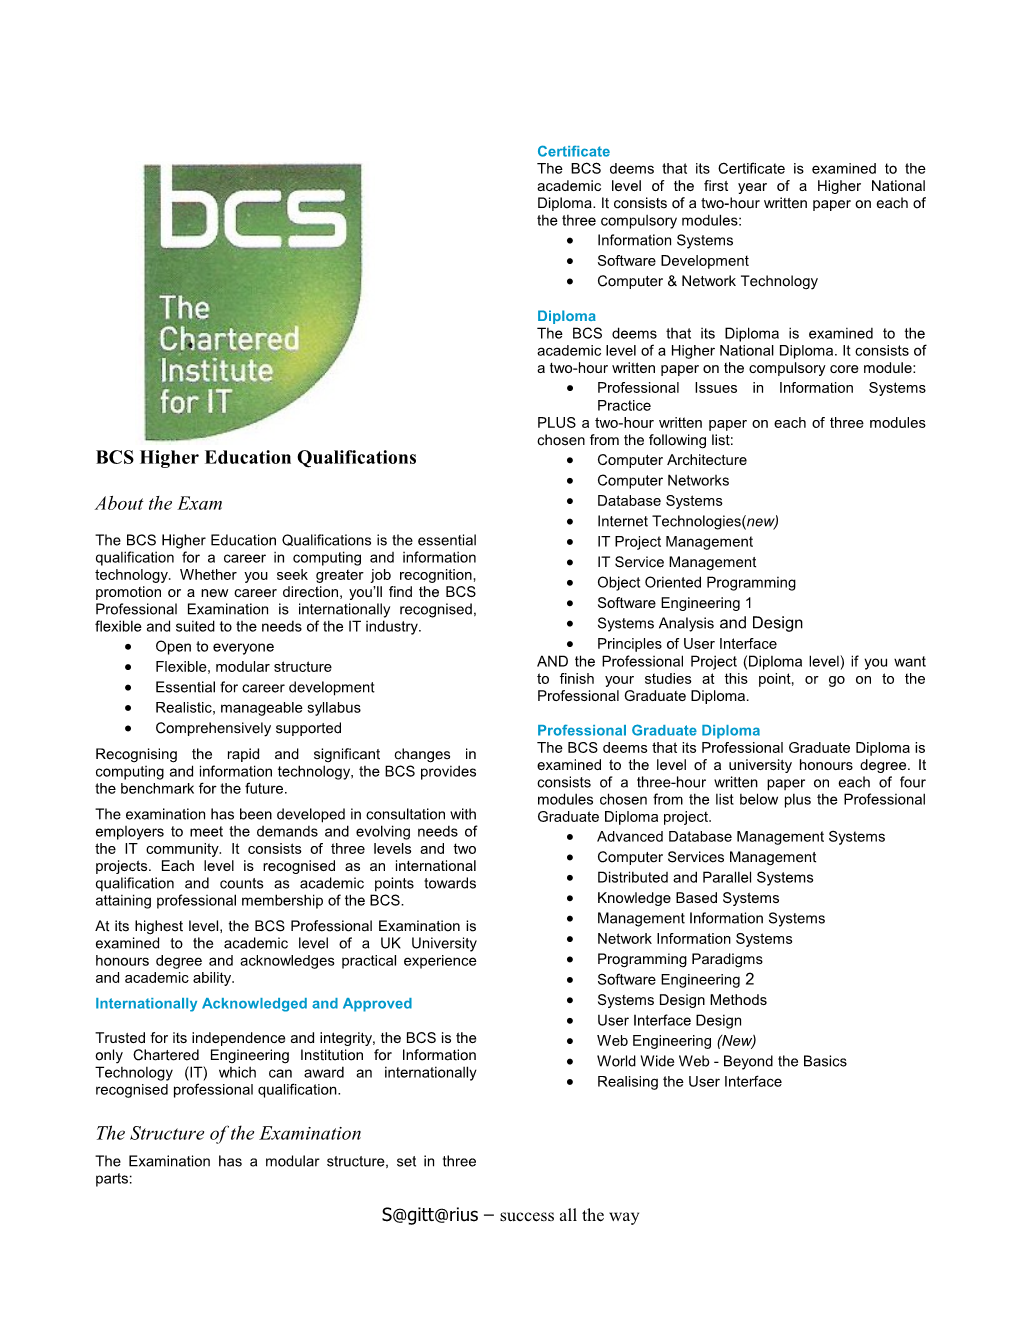 BCS Higher Education Qualifications